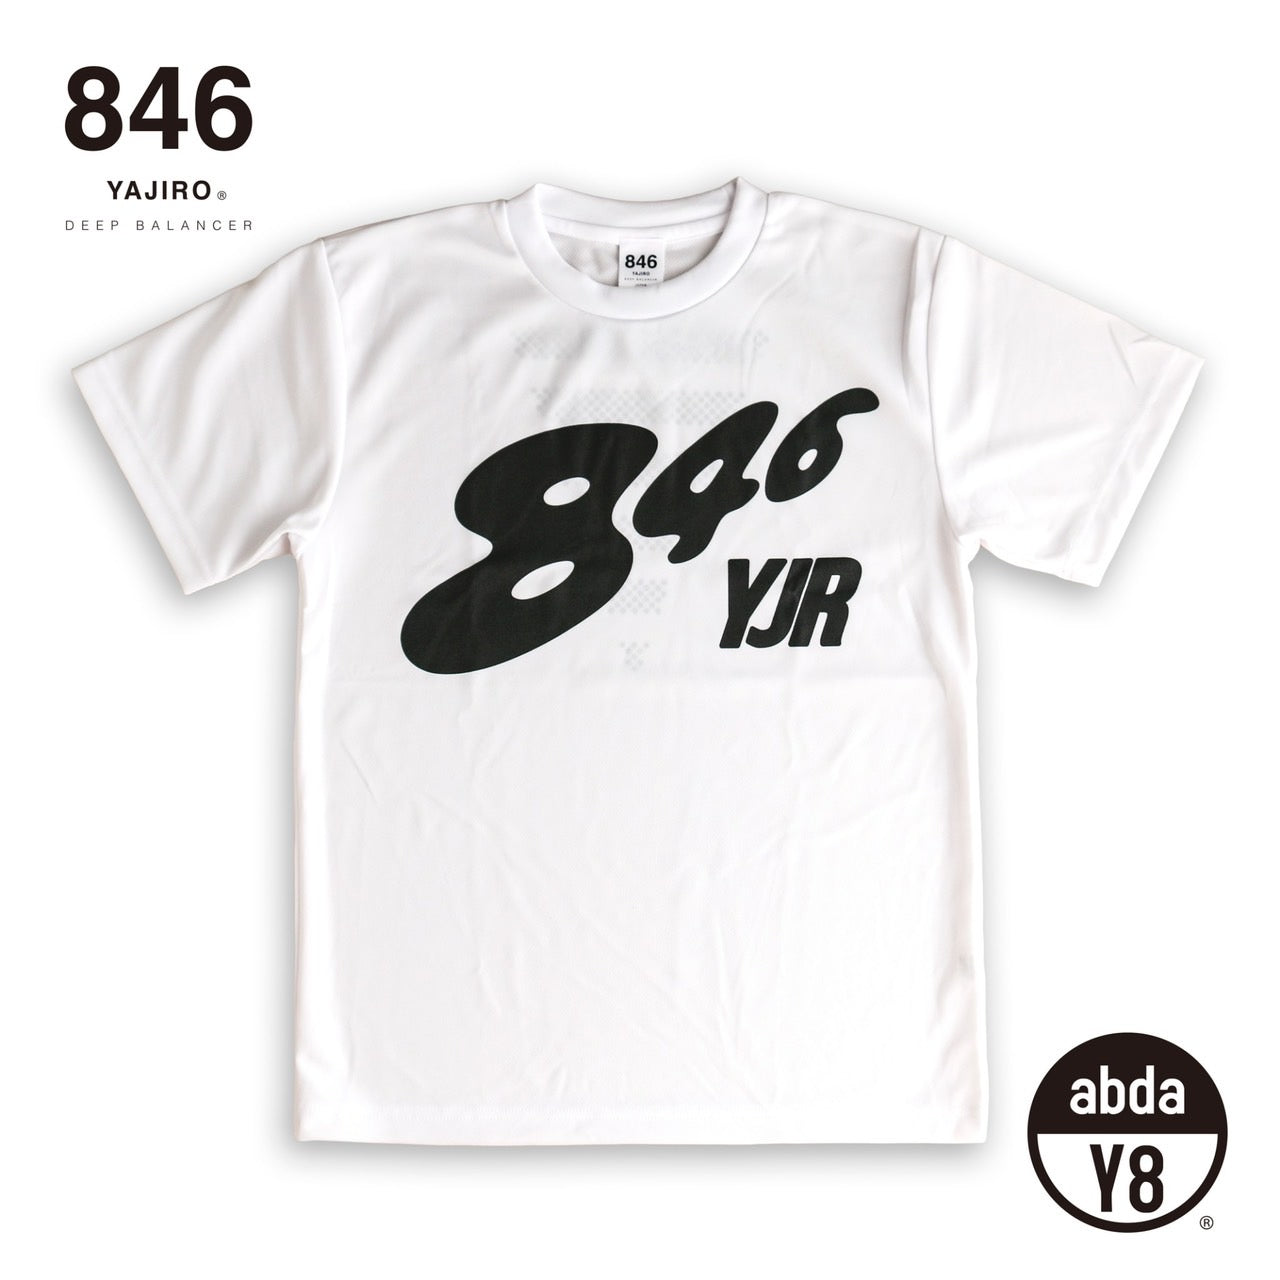 joy series Training Dry T-shirt〔FLASH LOGO〕WHITE (Unisex)